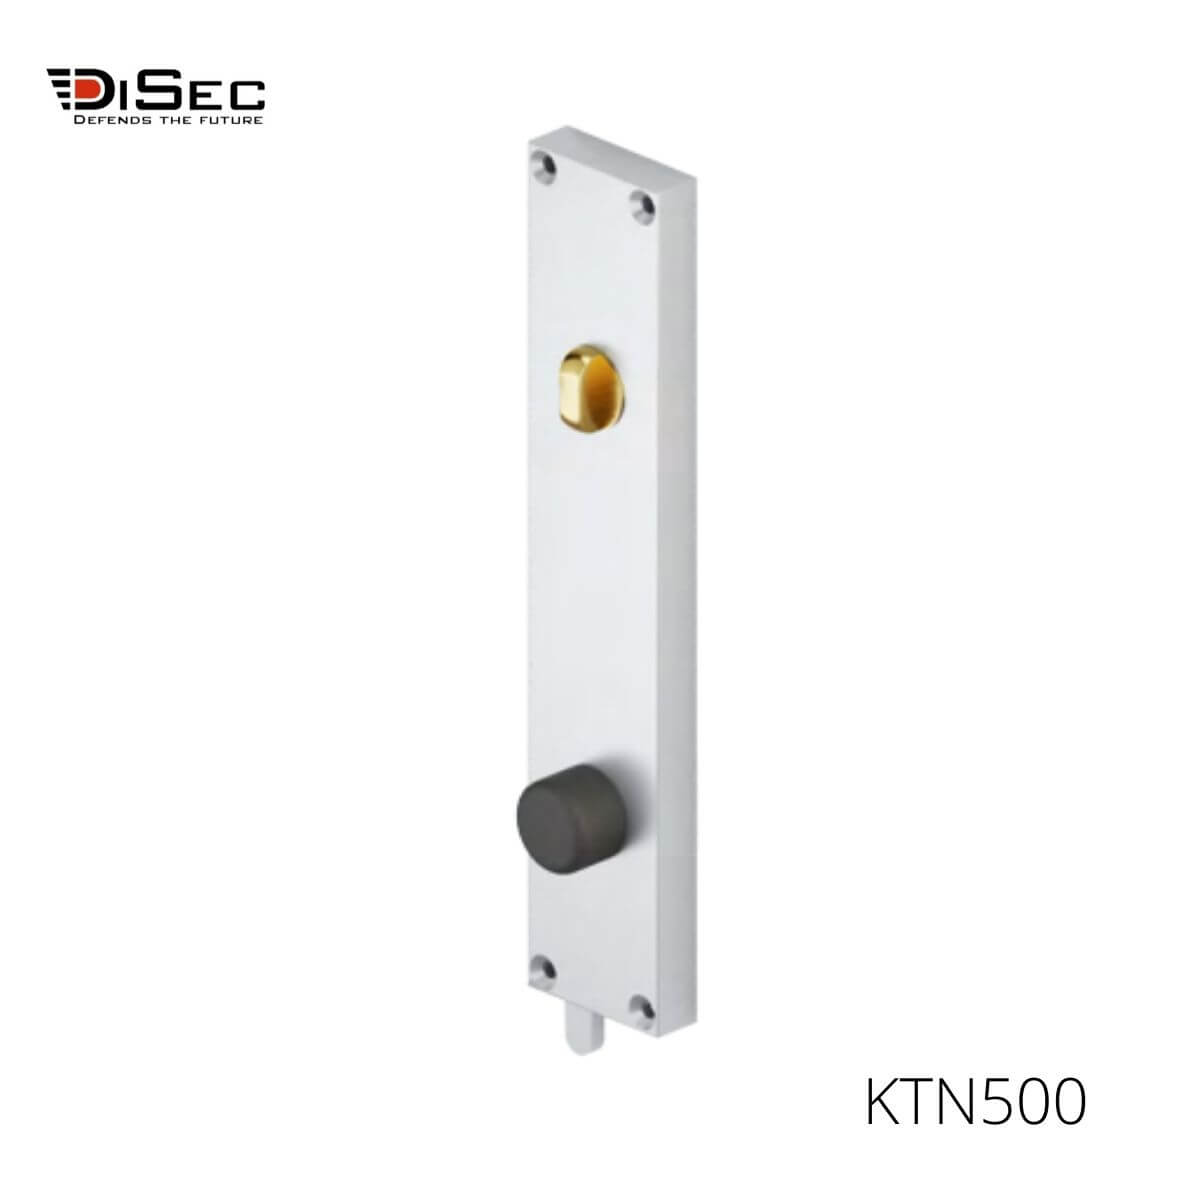 Bloqueo mecánico para puertas correderas KTN500 DISEC